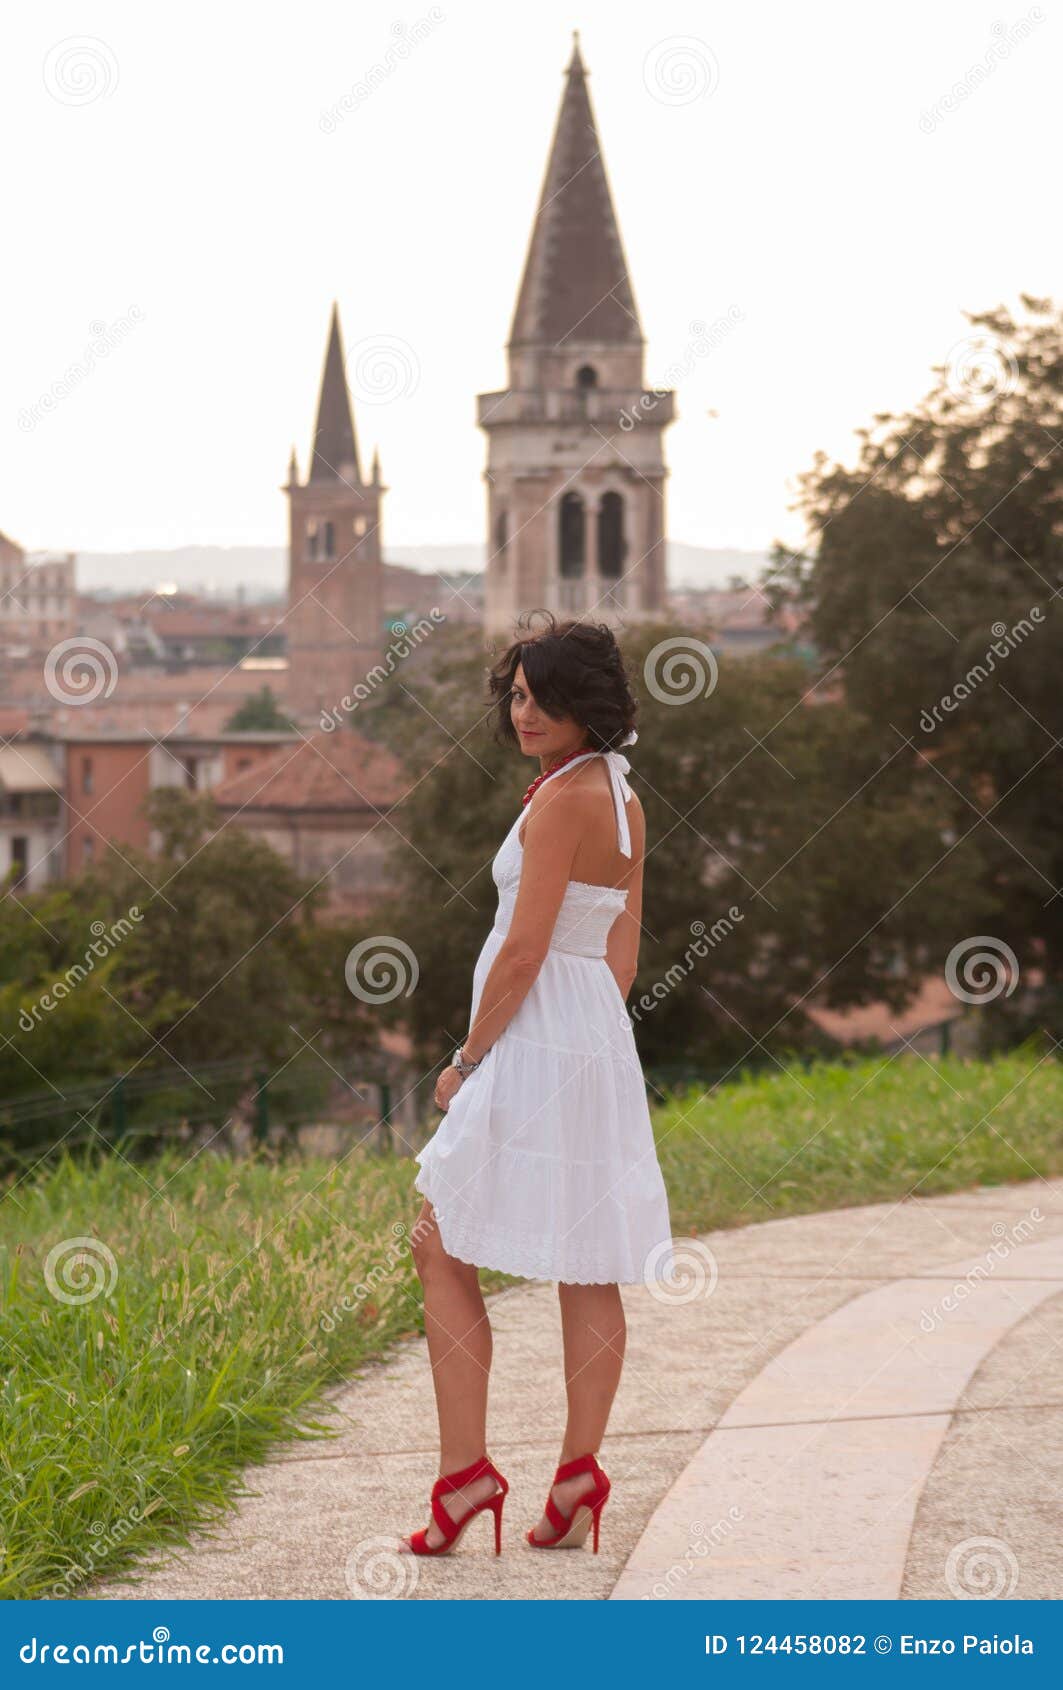 white dress white heels